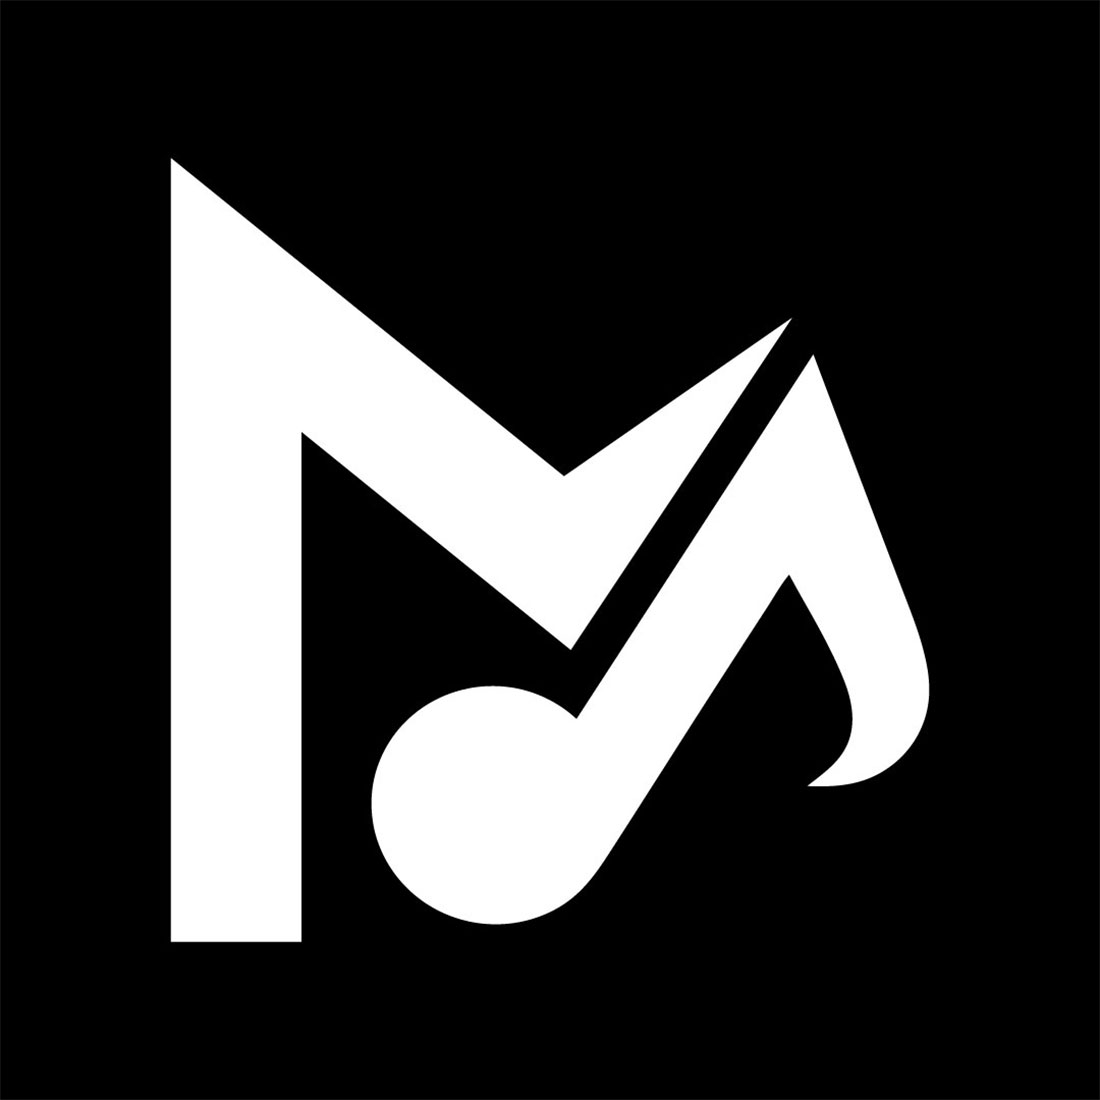 Music MB Studio Letter White Logo Design preview image.